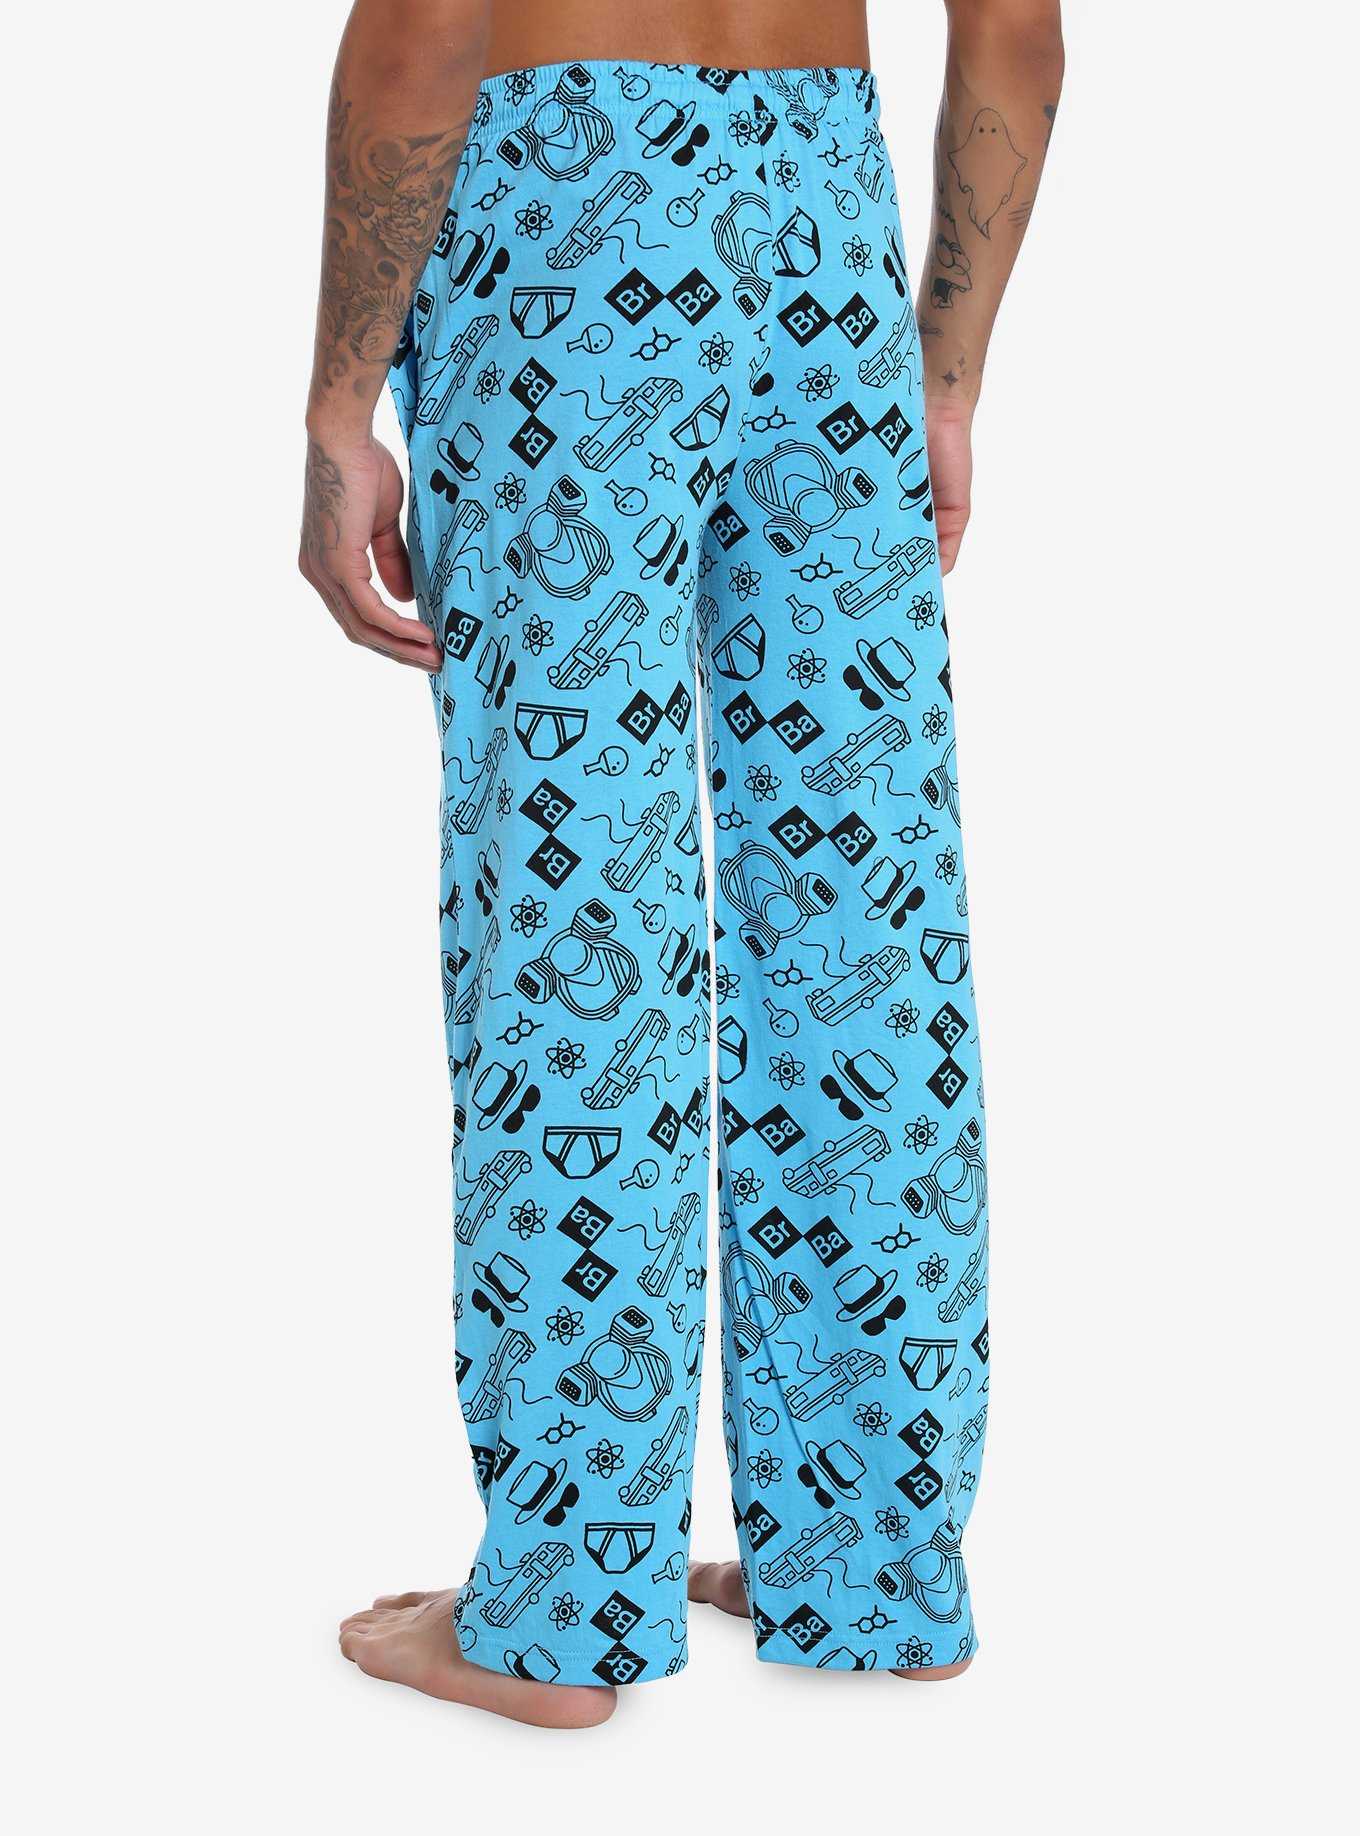 Breaking Bad Icons Pajama Pants, , hi-res